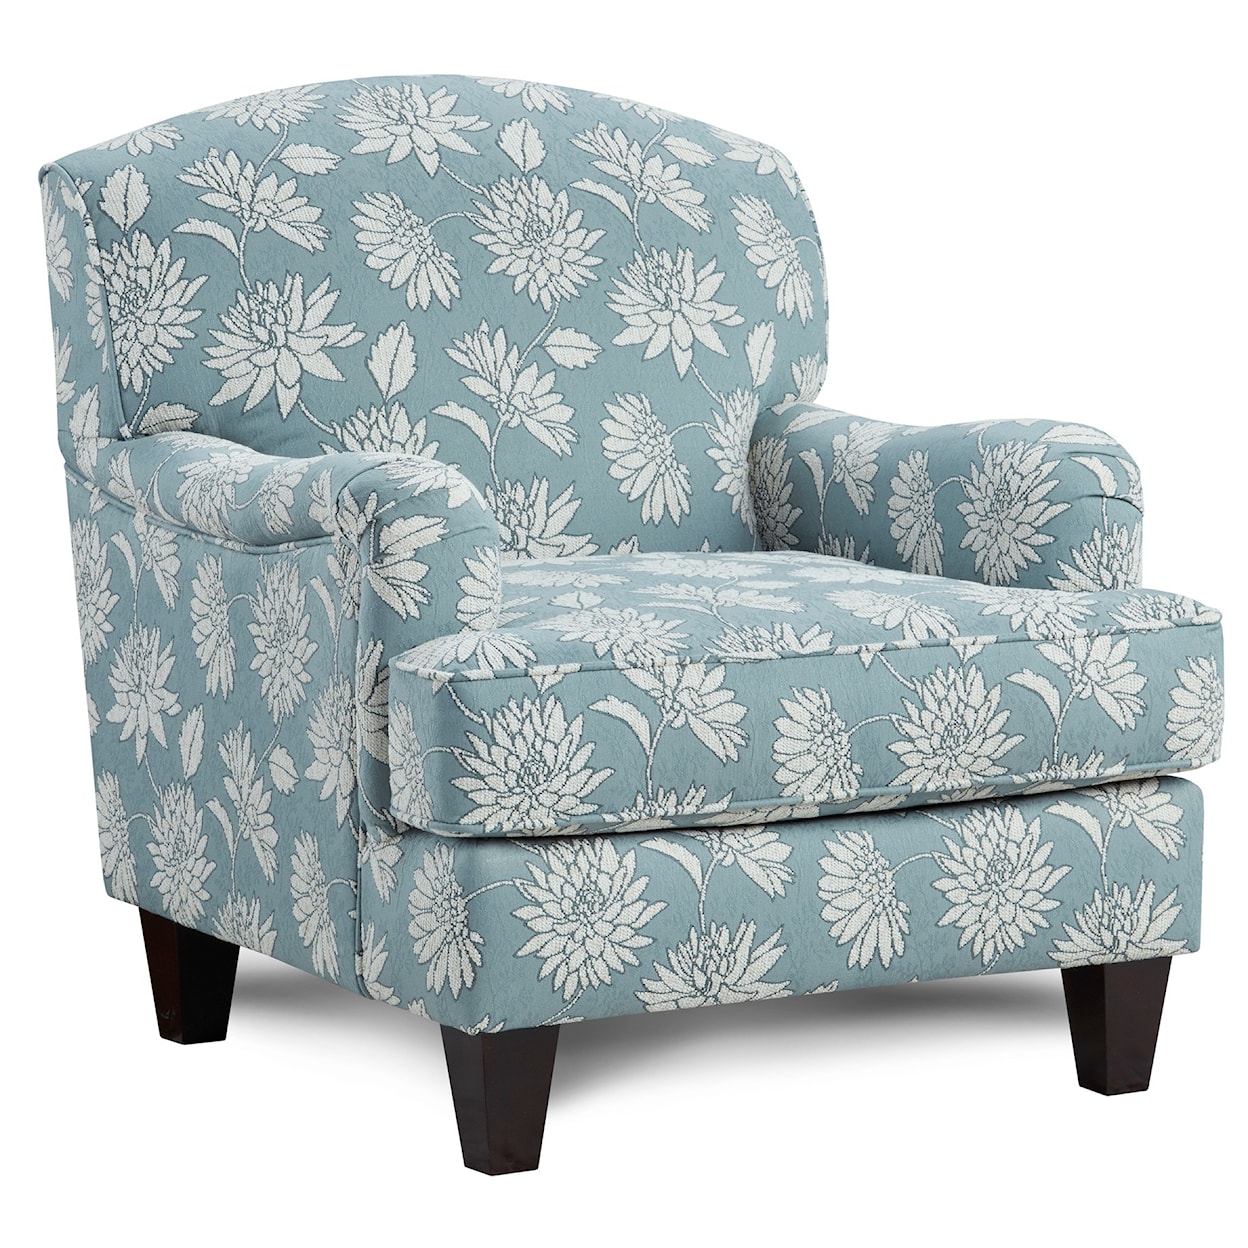 Fusion Furniture 59 INVITATION MIST Accent Chair